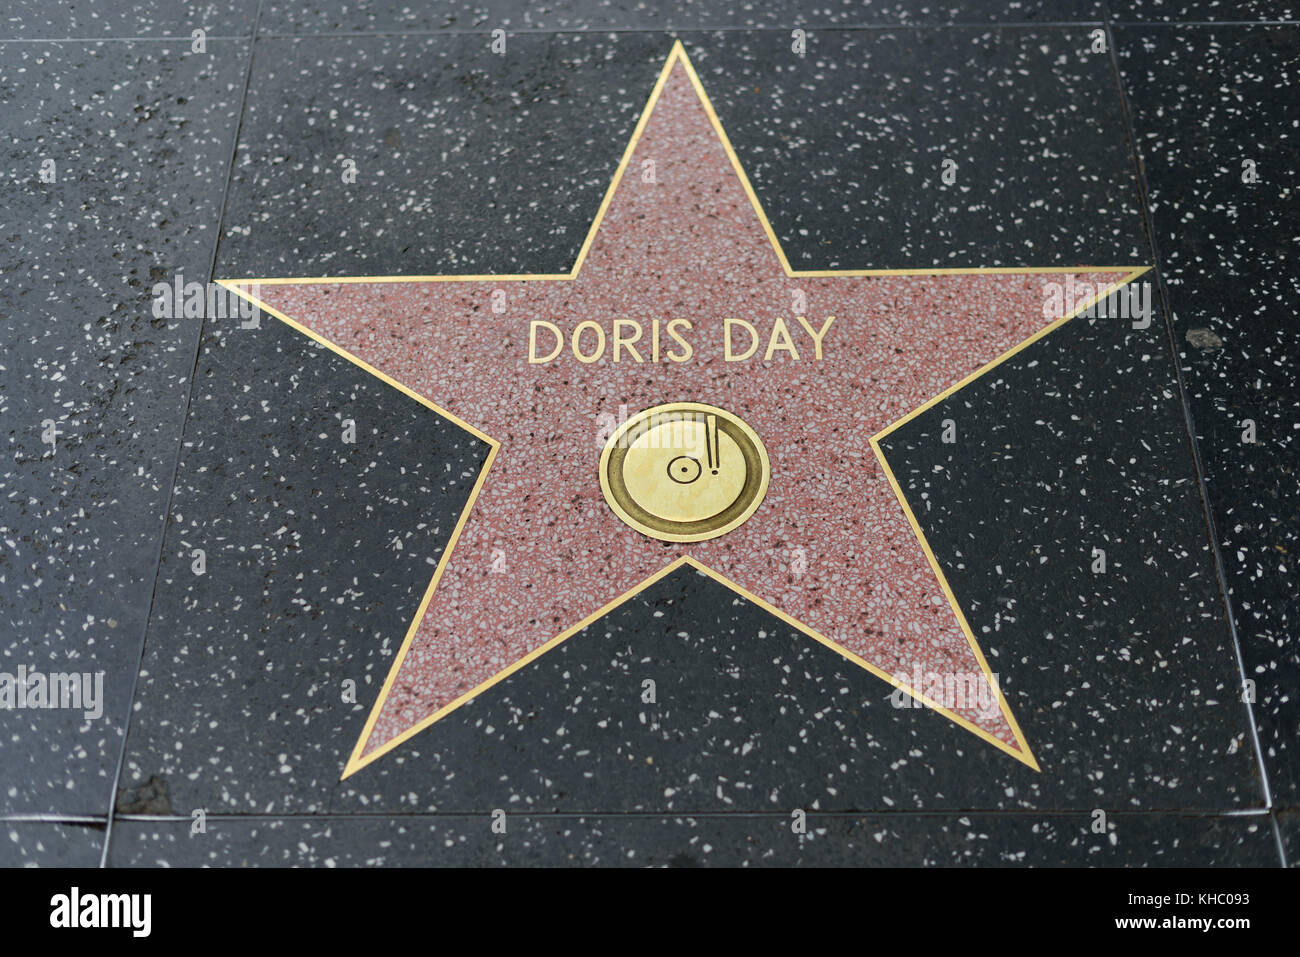 HOLLYWOOD, CA - DEZEMBER 06: Dorris Day Star auf dem Hollywood Walk of Fame in Hollywood, Kalifornien am 6. Dezember 2016. Stockfoto